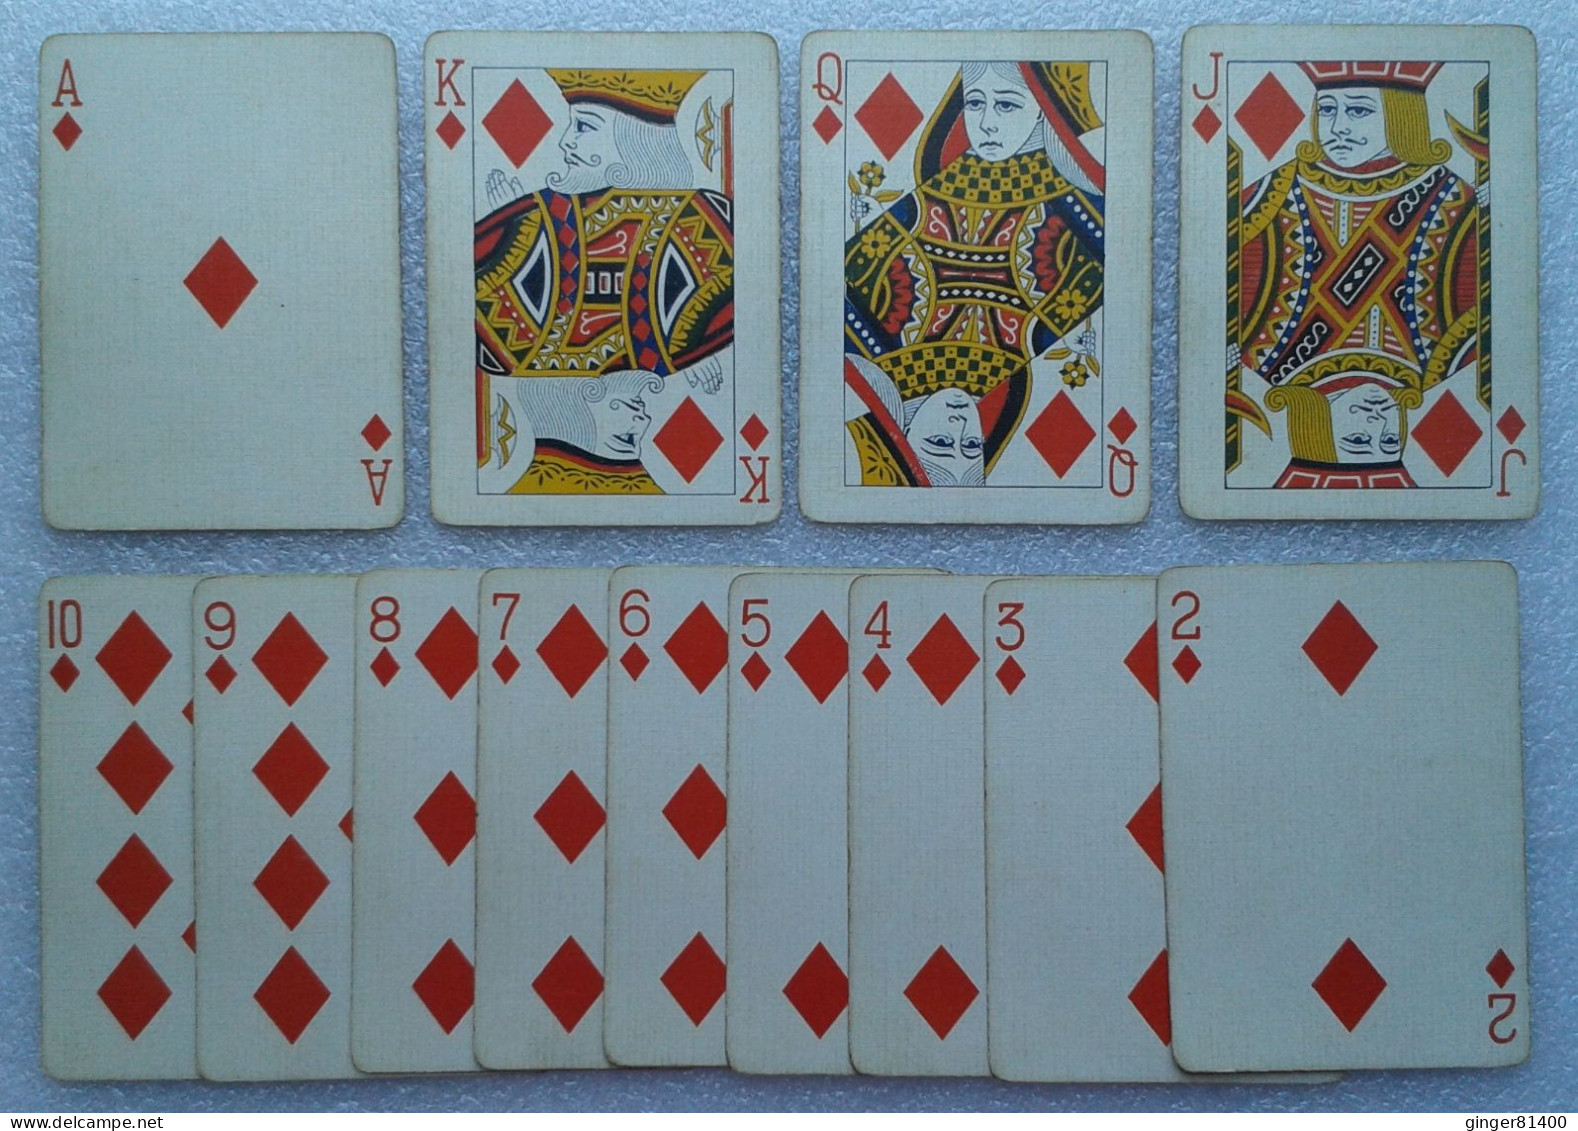 Ancien Jeu De 52 Cartes BICYCLE 808 Air CUSHION - The U.S PLAYIND CARD CO. Cincinnati U.S.A Russel & Morgan Factories - Playing Cards (classic)